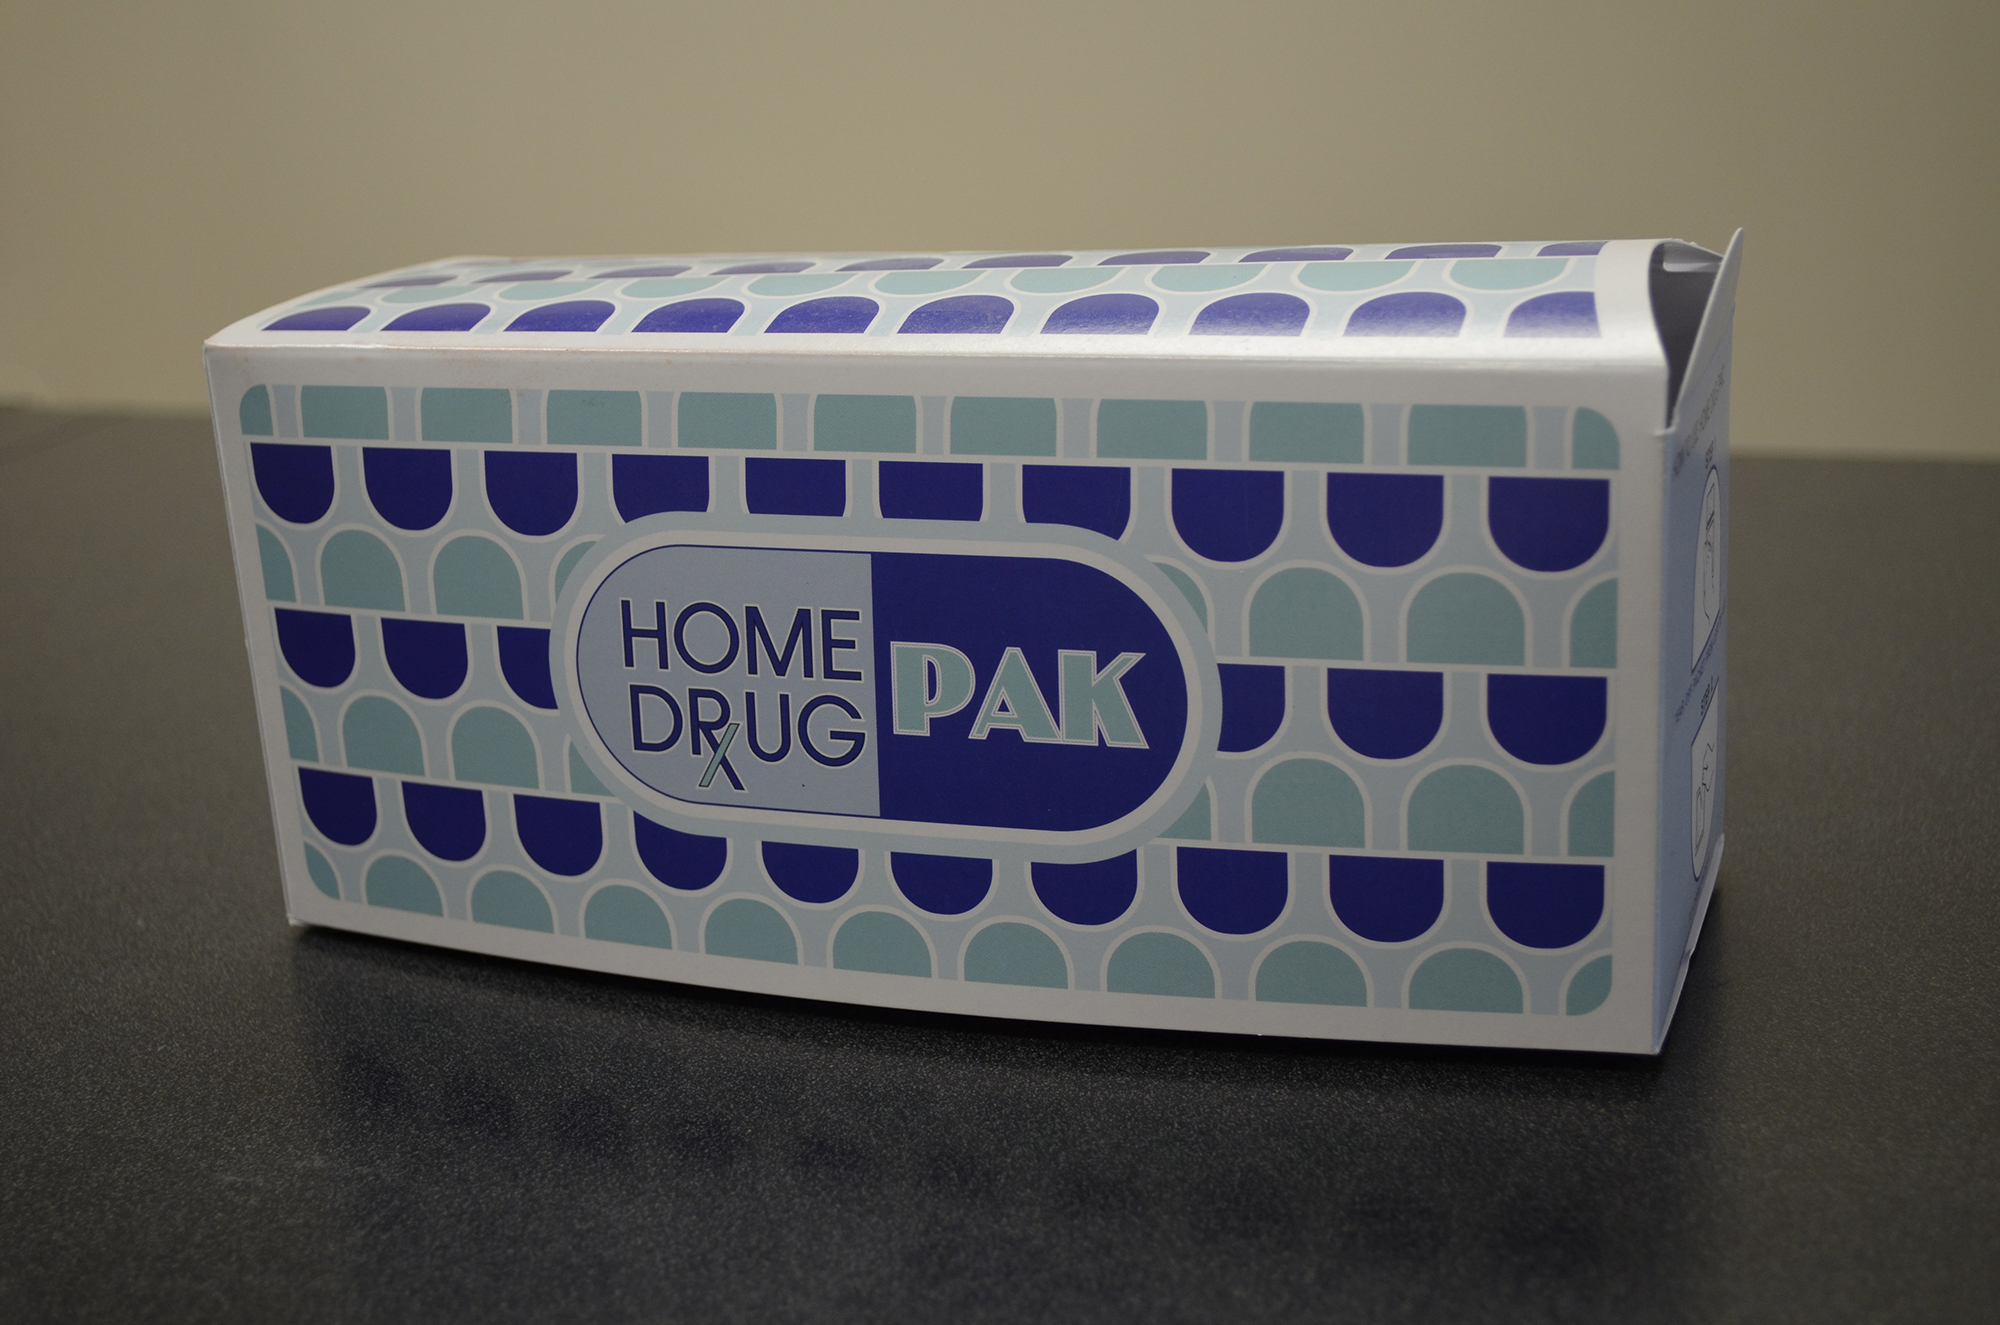 Home Drug Pak box